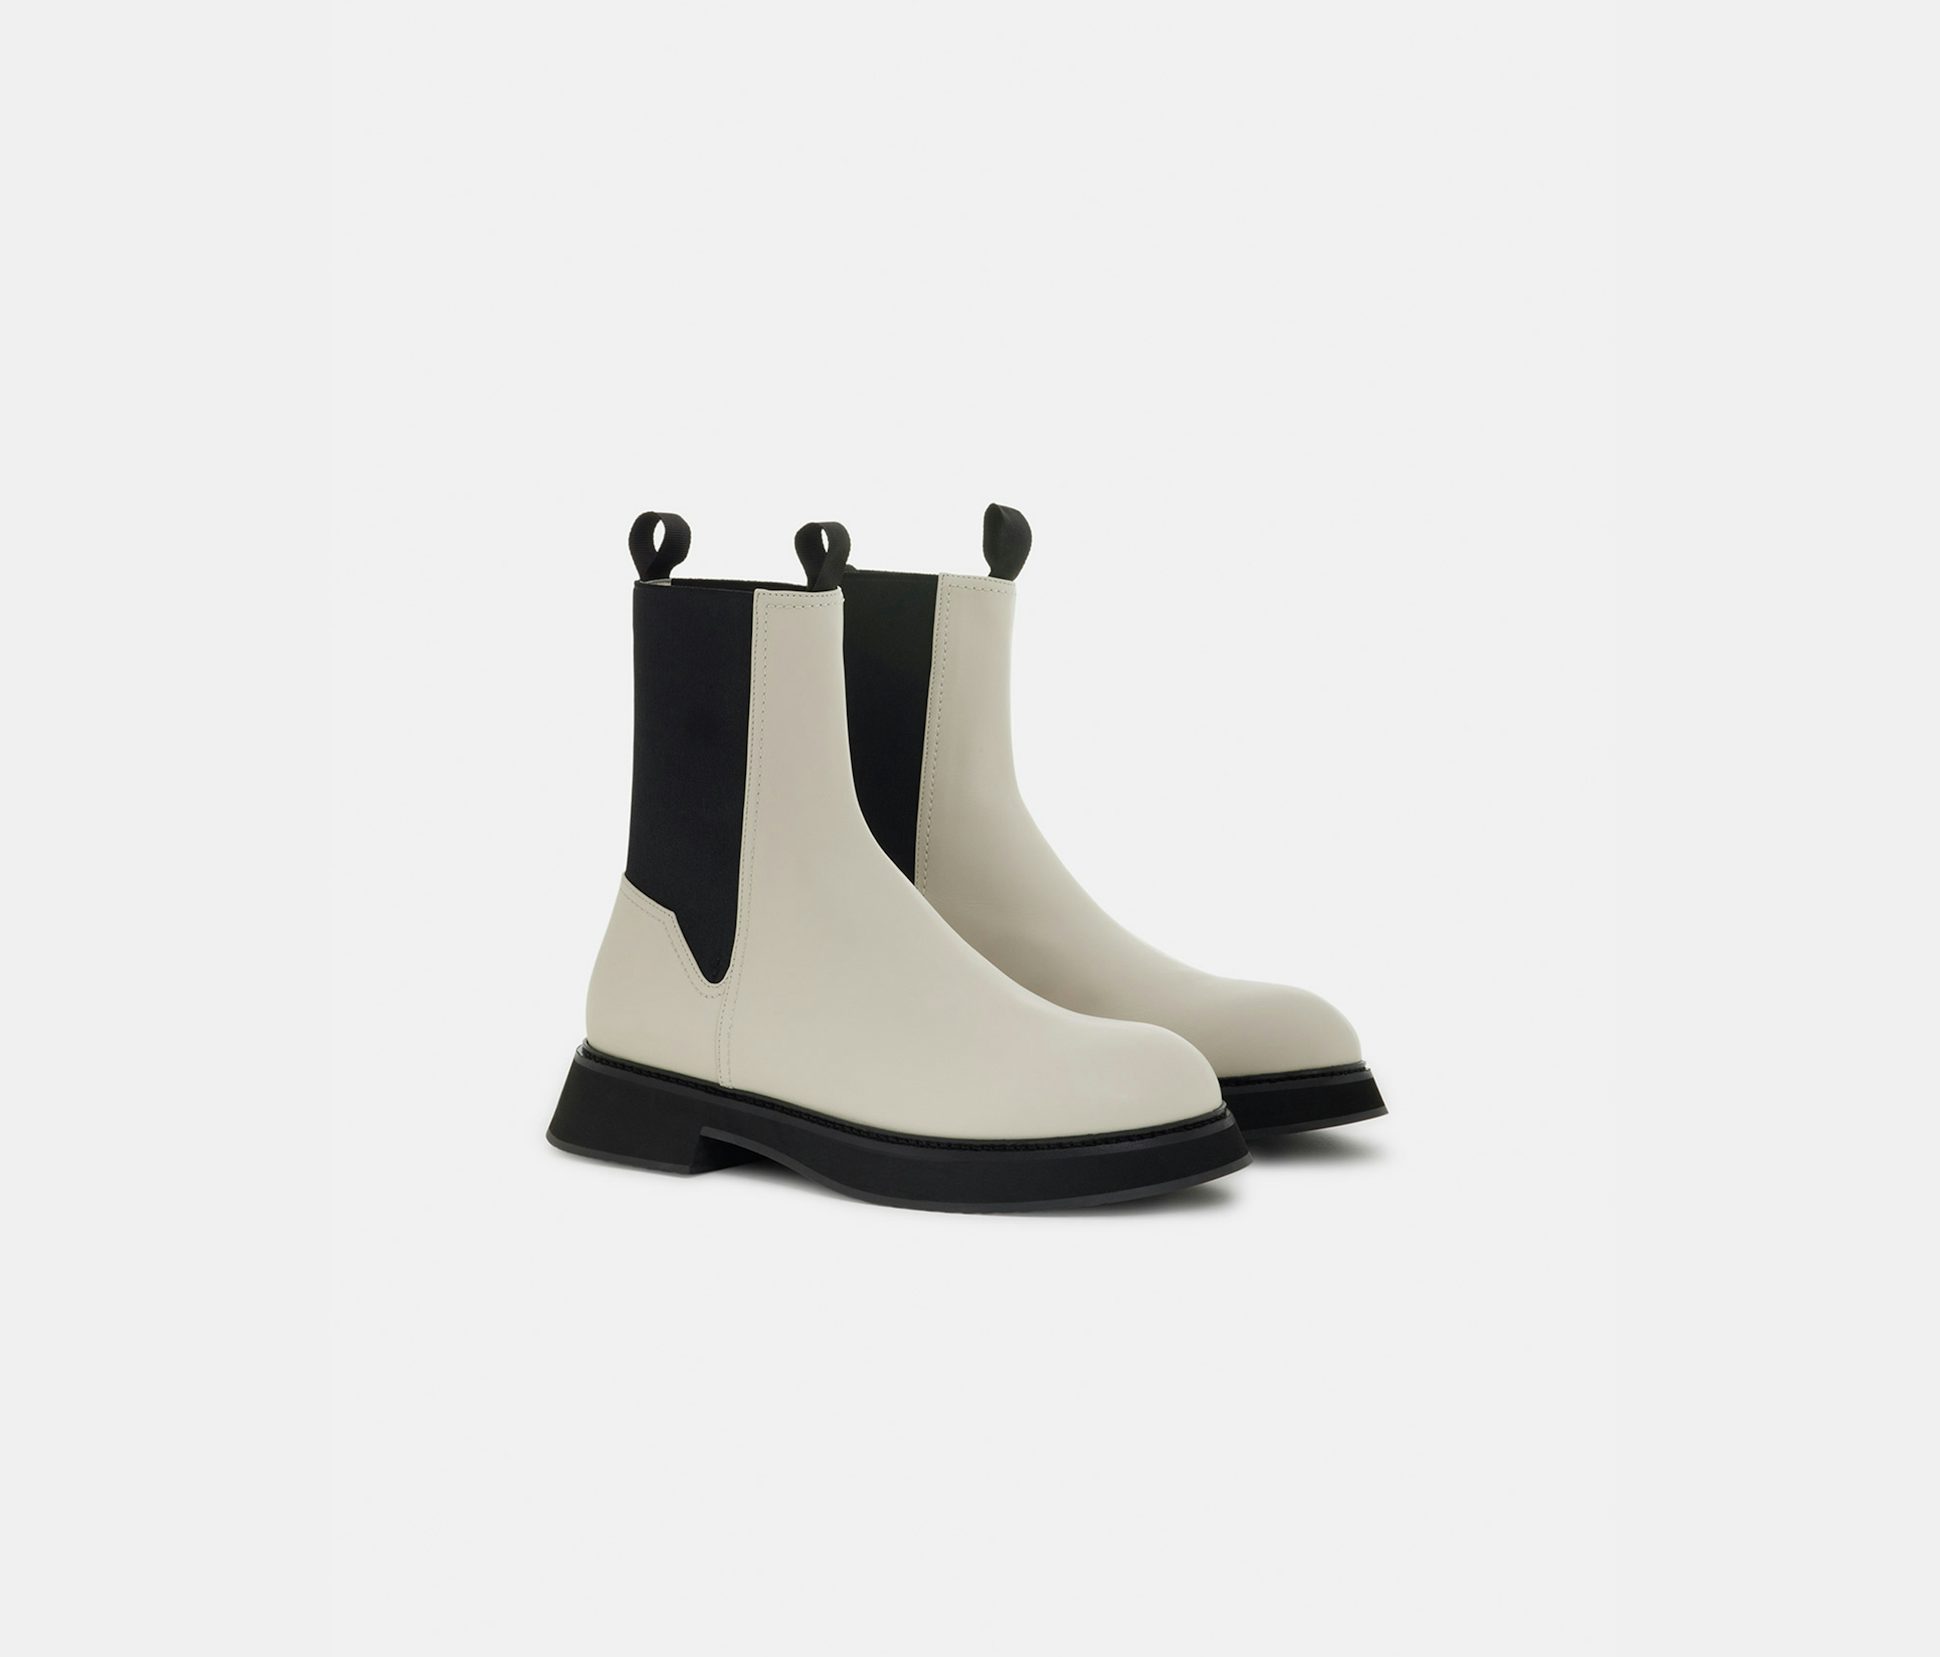 Calf leather boots pinkish grey - Nina Ricci